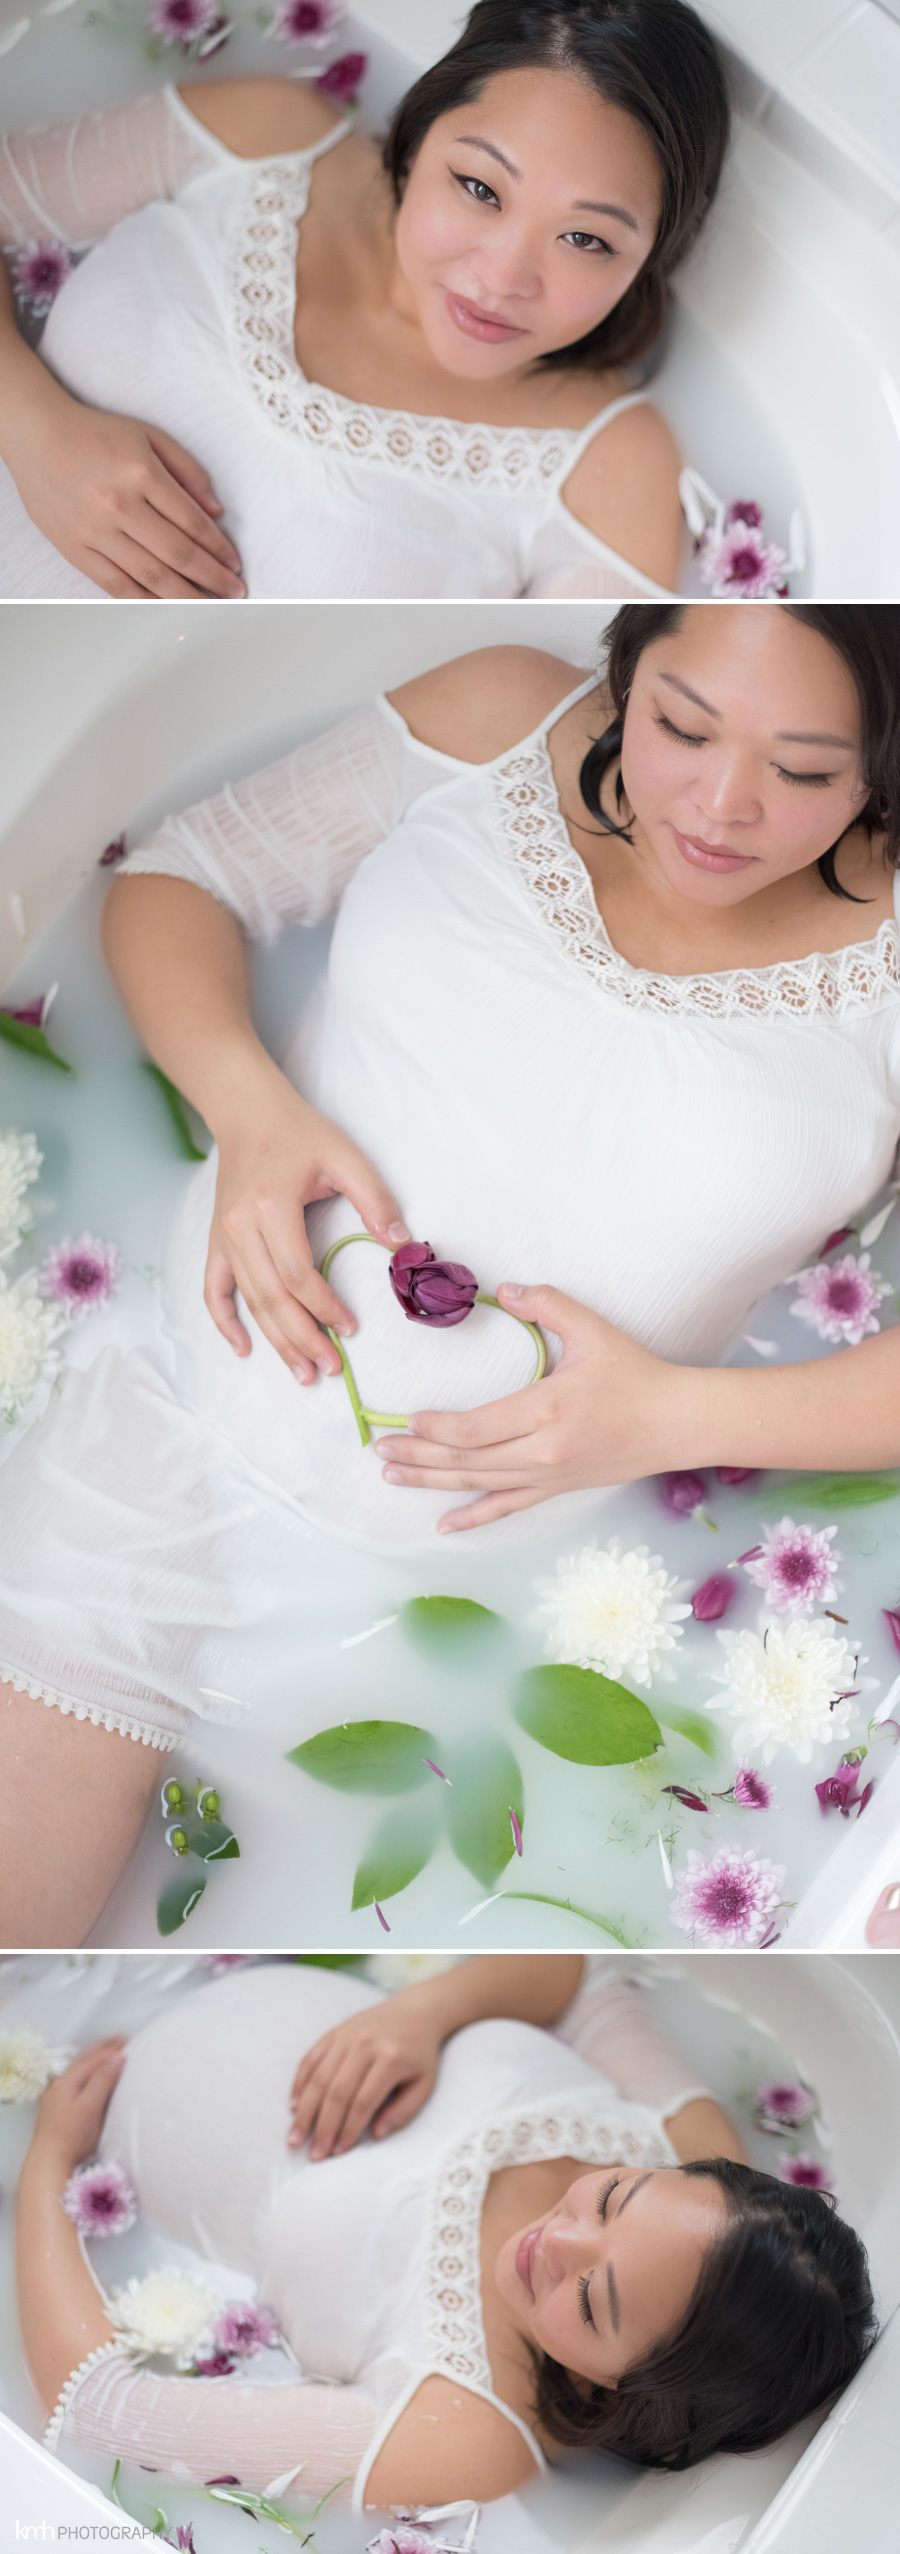 Milkbath Maternity Session | KMH Photography | Las Vegas Maternity Photographer